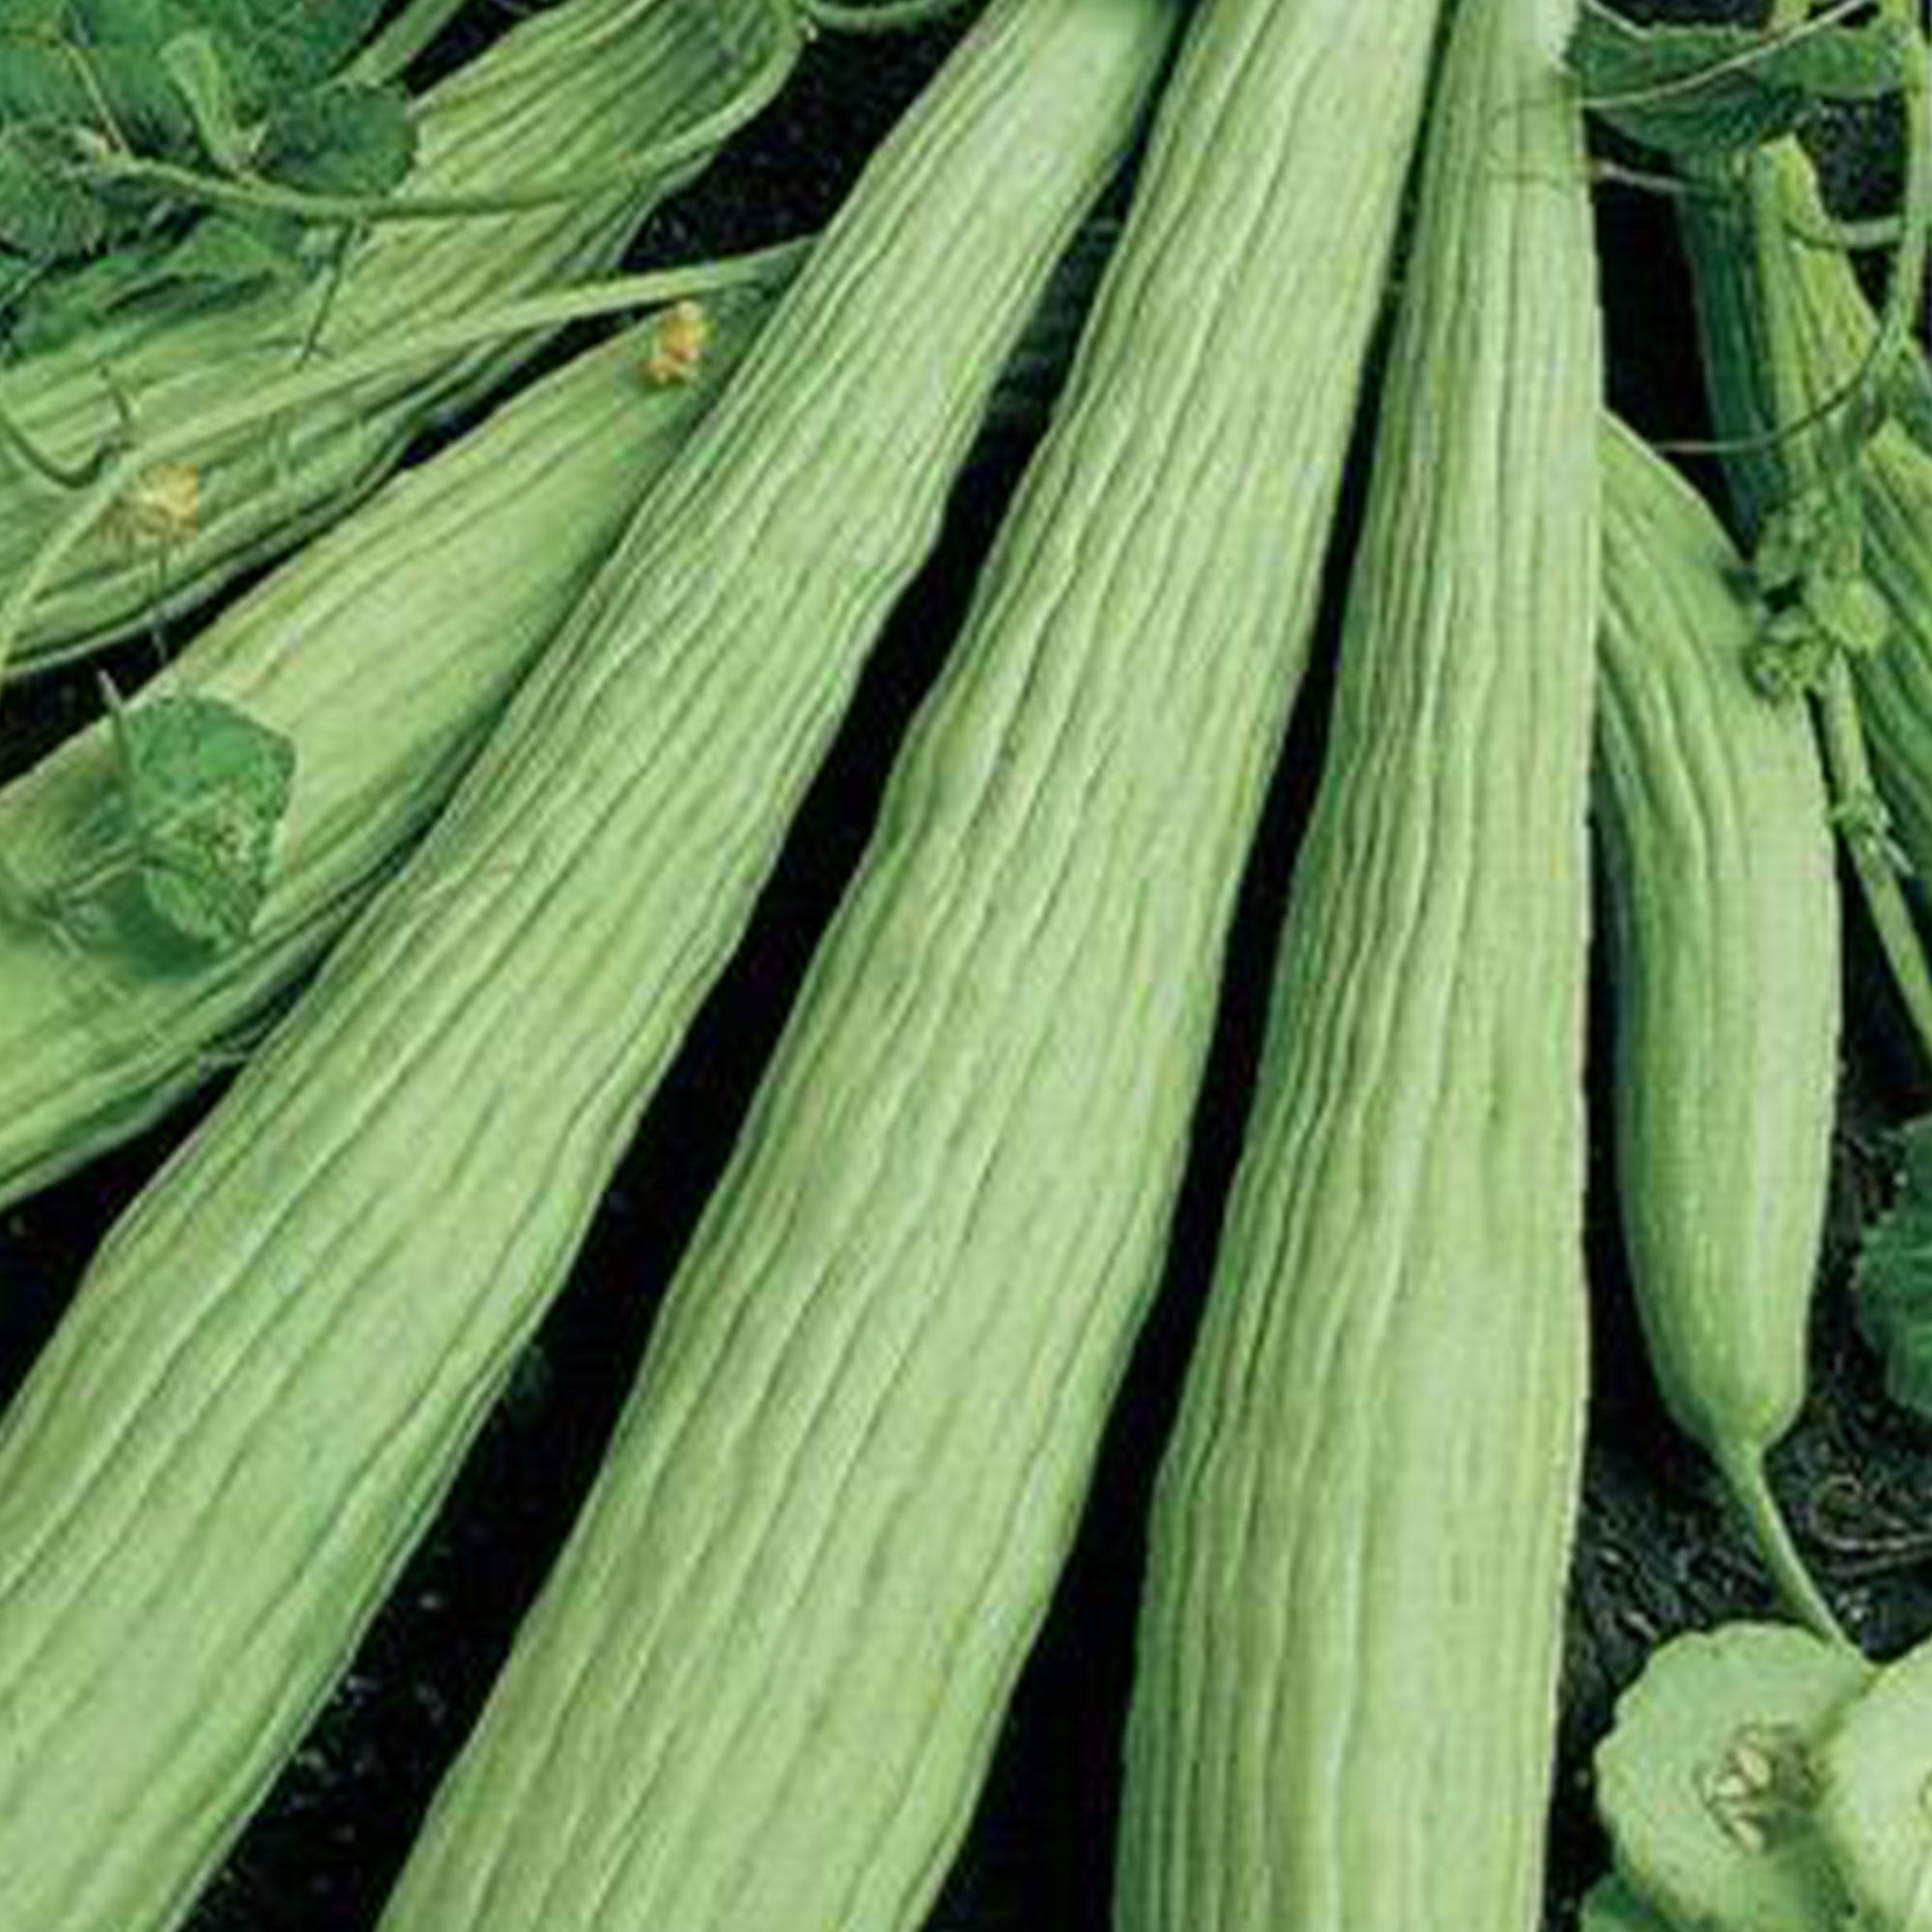 35 CUCUMBER Seeds Marketmore ORGANIC SEED Non-GMO Heirloom Cucumbers grow USA 